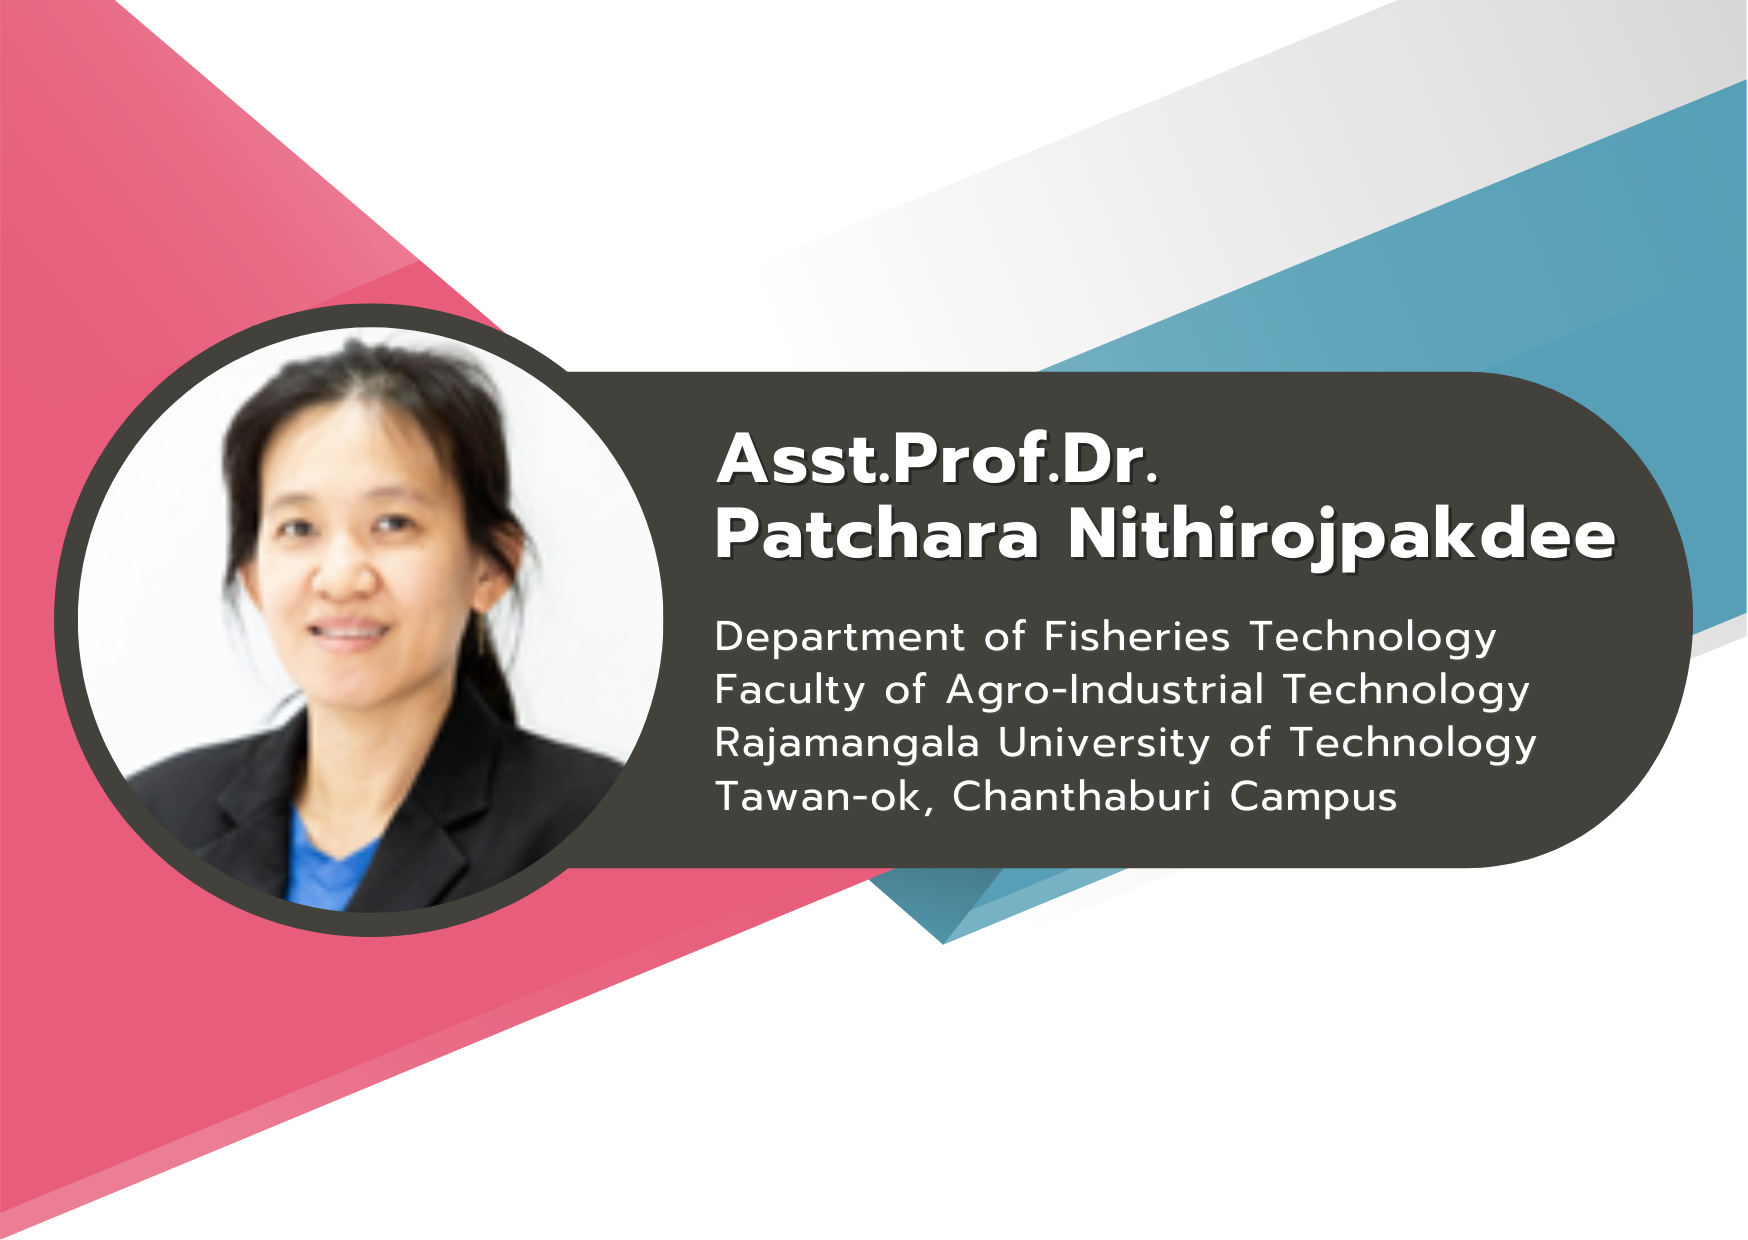 Asst.Prof.Dr. Patchara Nithirojpakdee